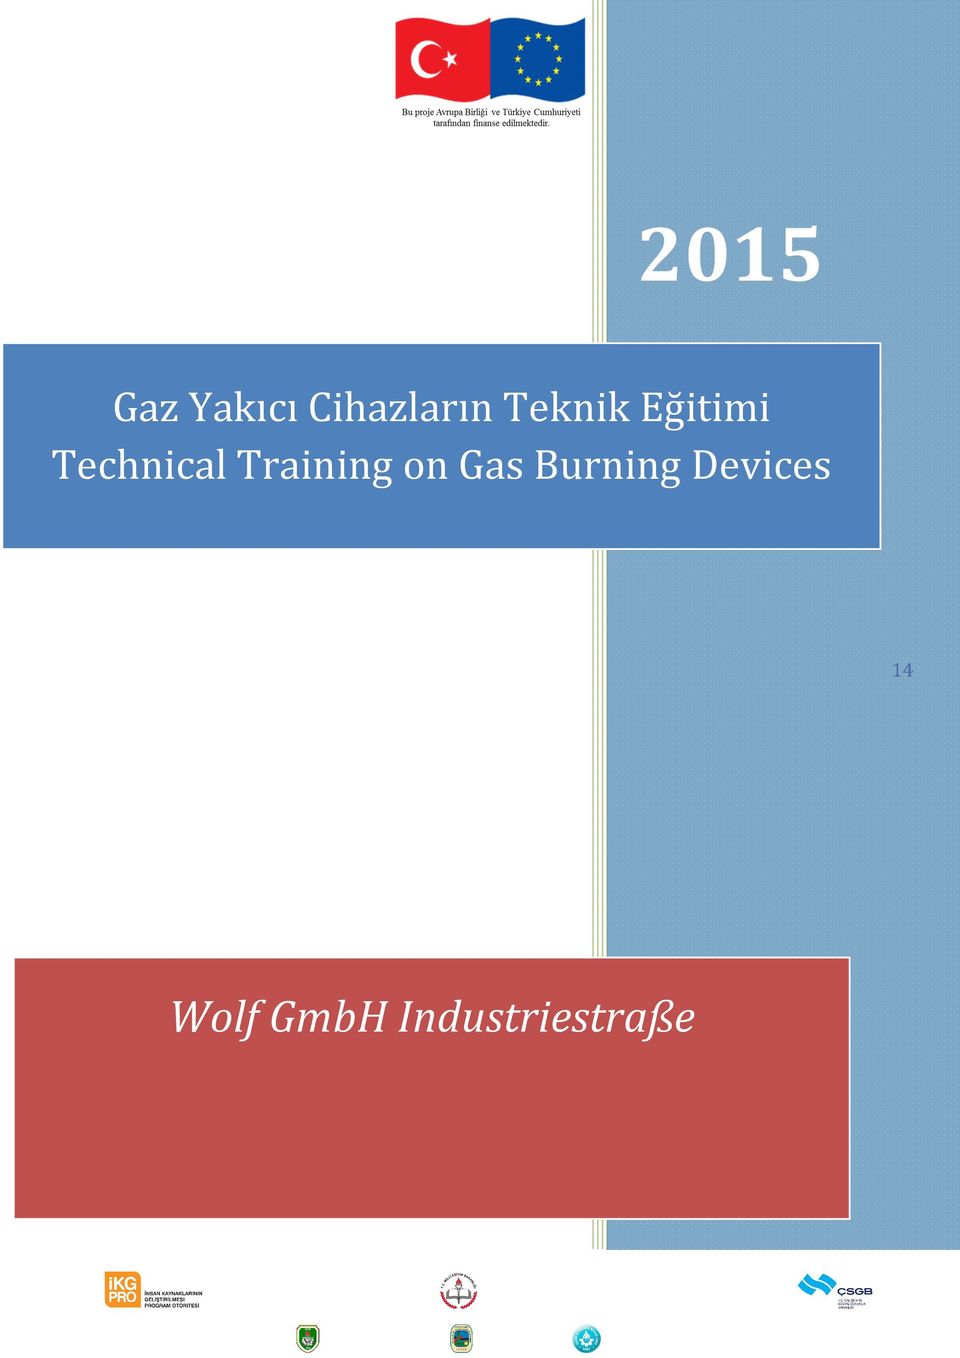 Training on Gas Burning